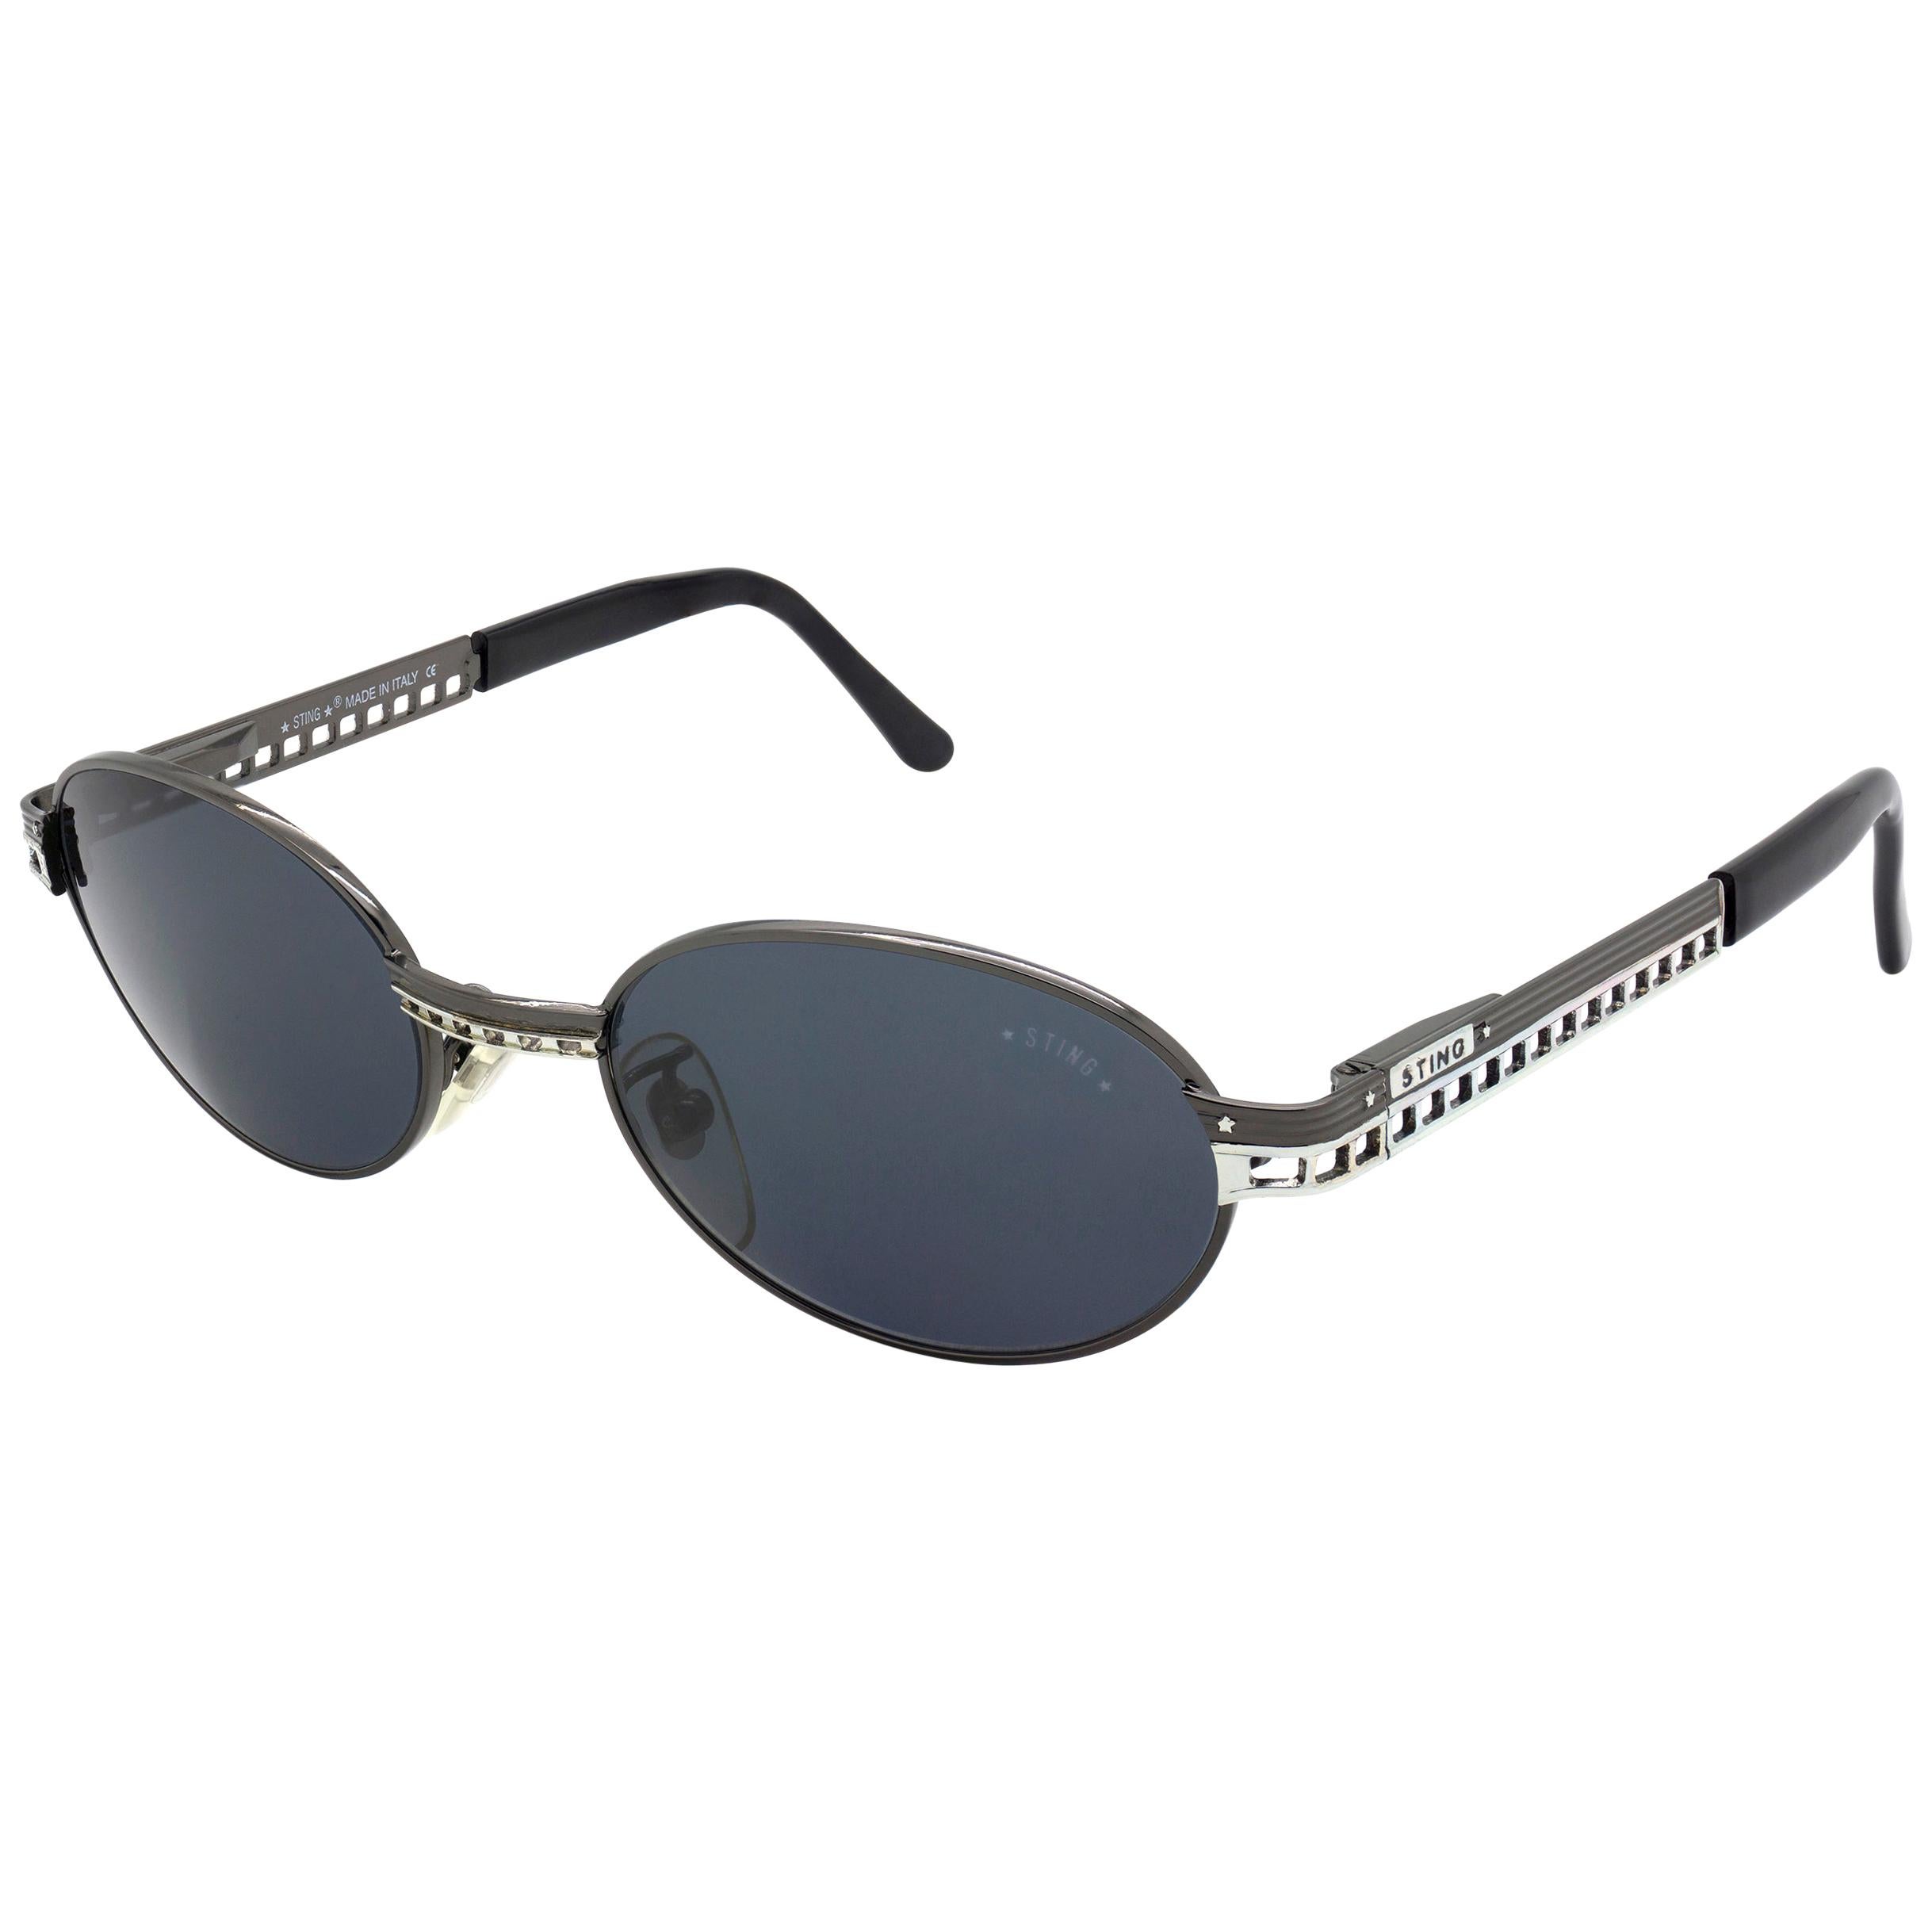 Ovale Sting-Sonnenbrille im Vintage-Stil, Italien 90er Jahre im Angebot